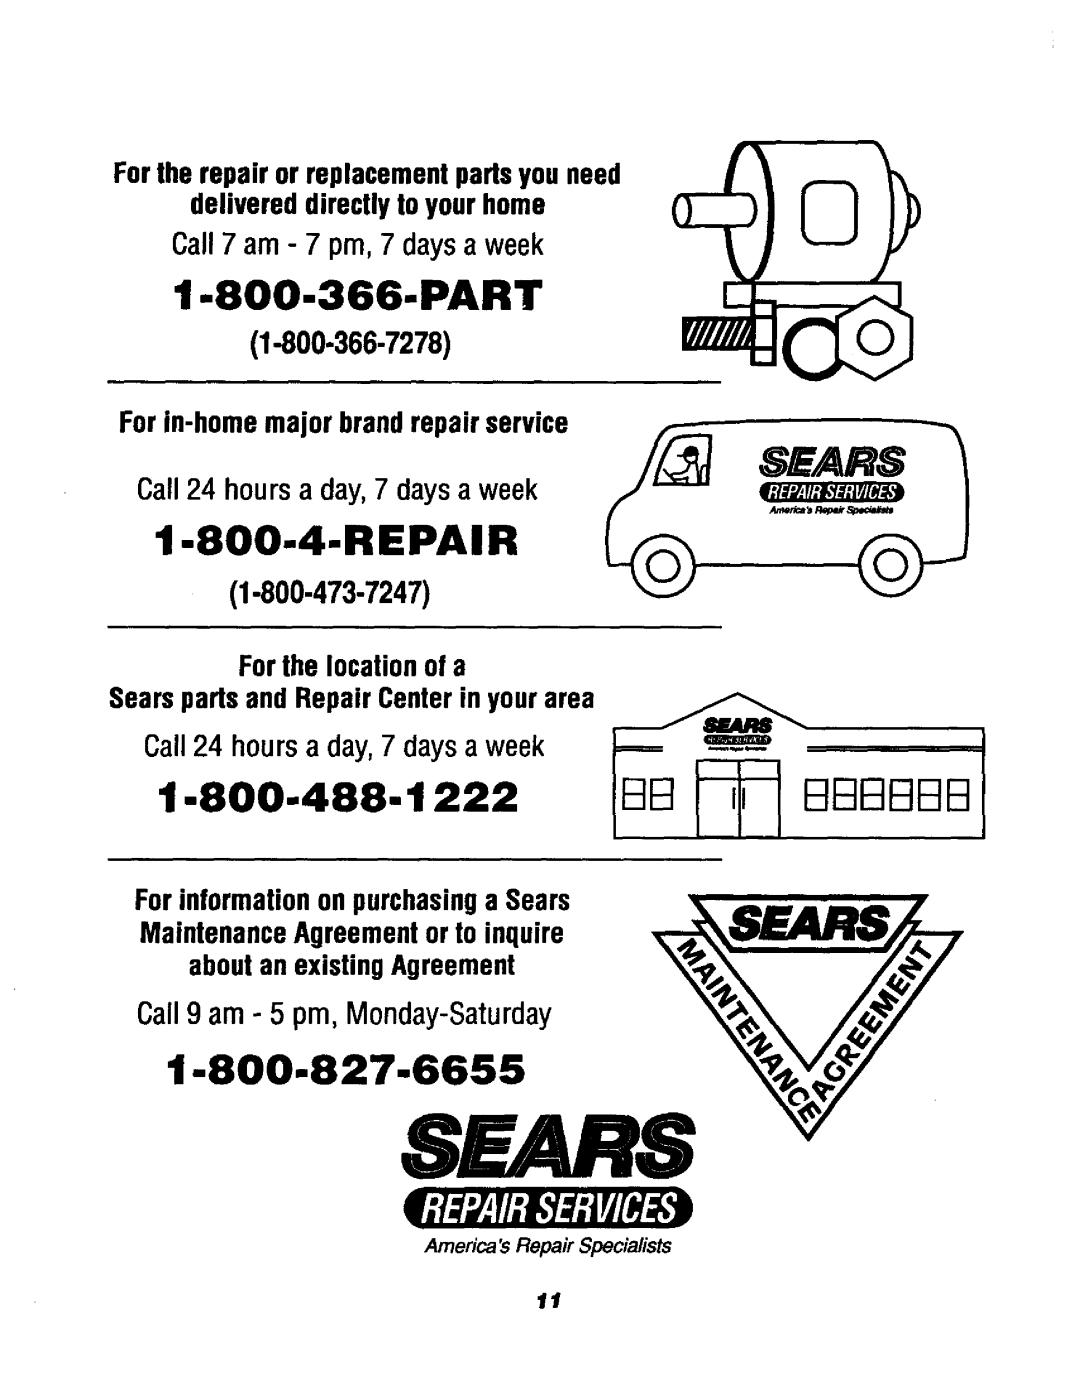 Sears 911.3235S, 911.32359 Call7 am - 7 pm,7 daysa week, Forthelocationofa, SearspartsandRepairCenterinyourarea 